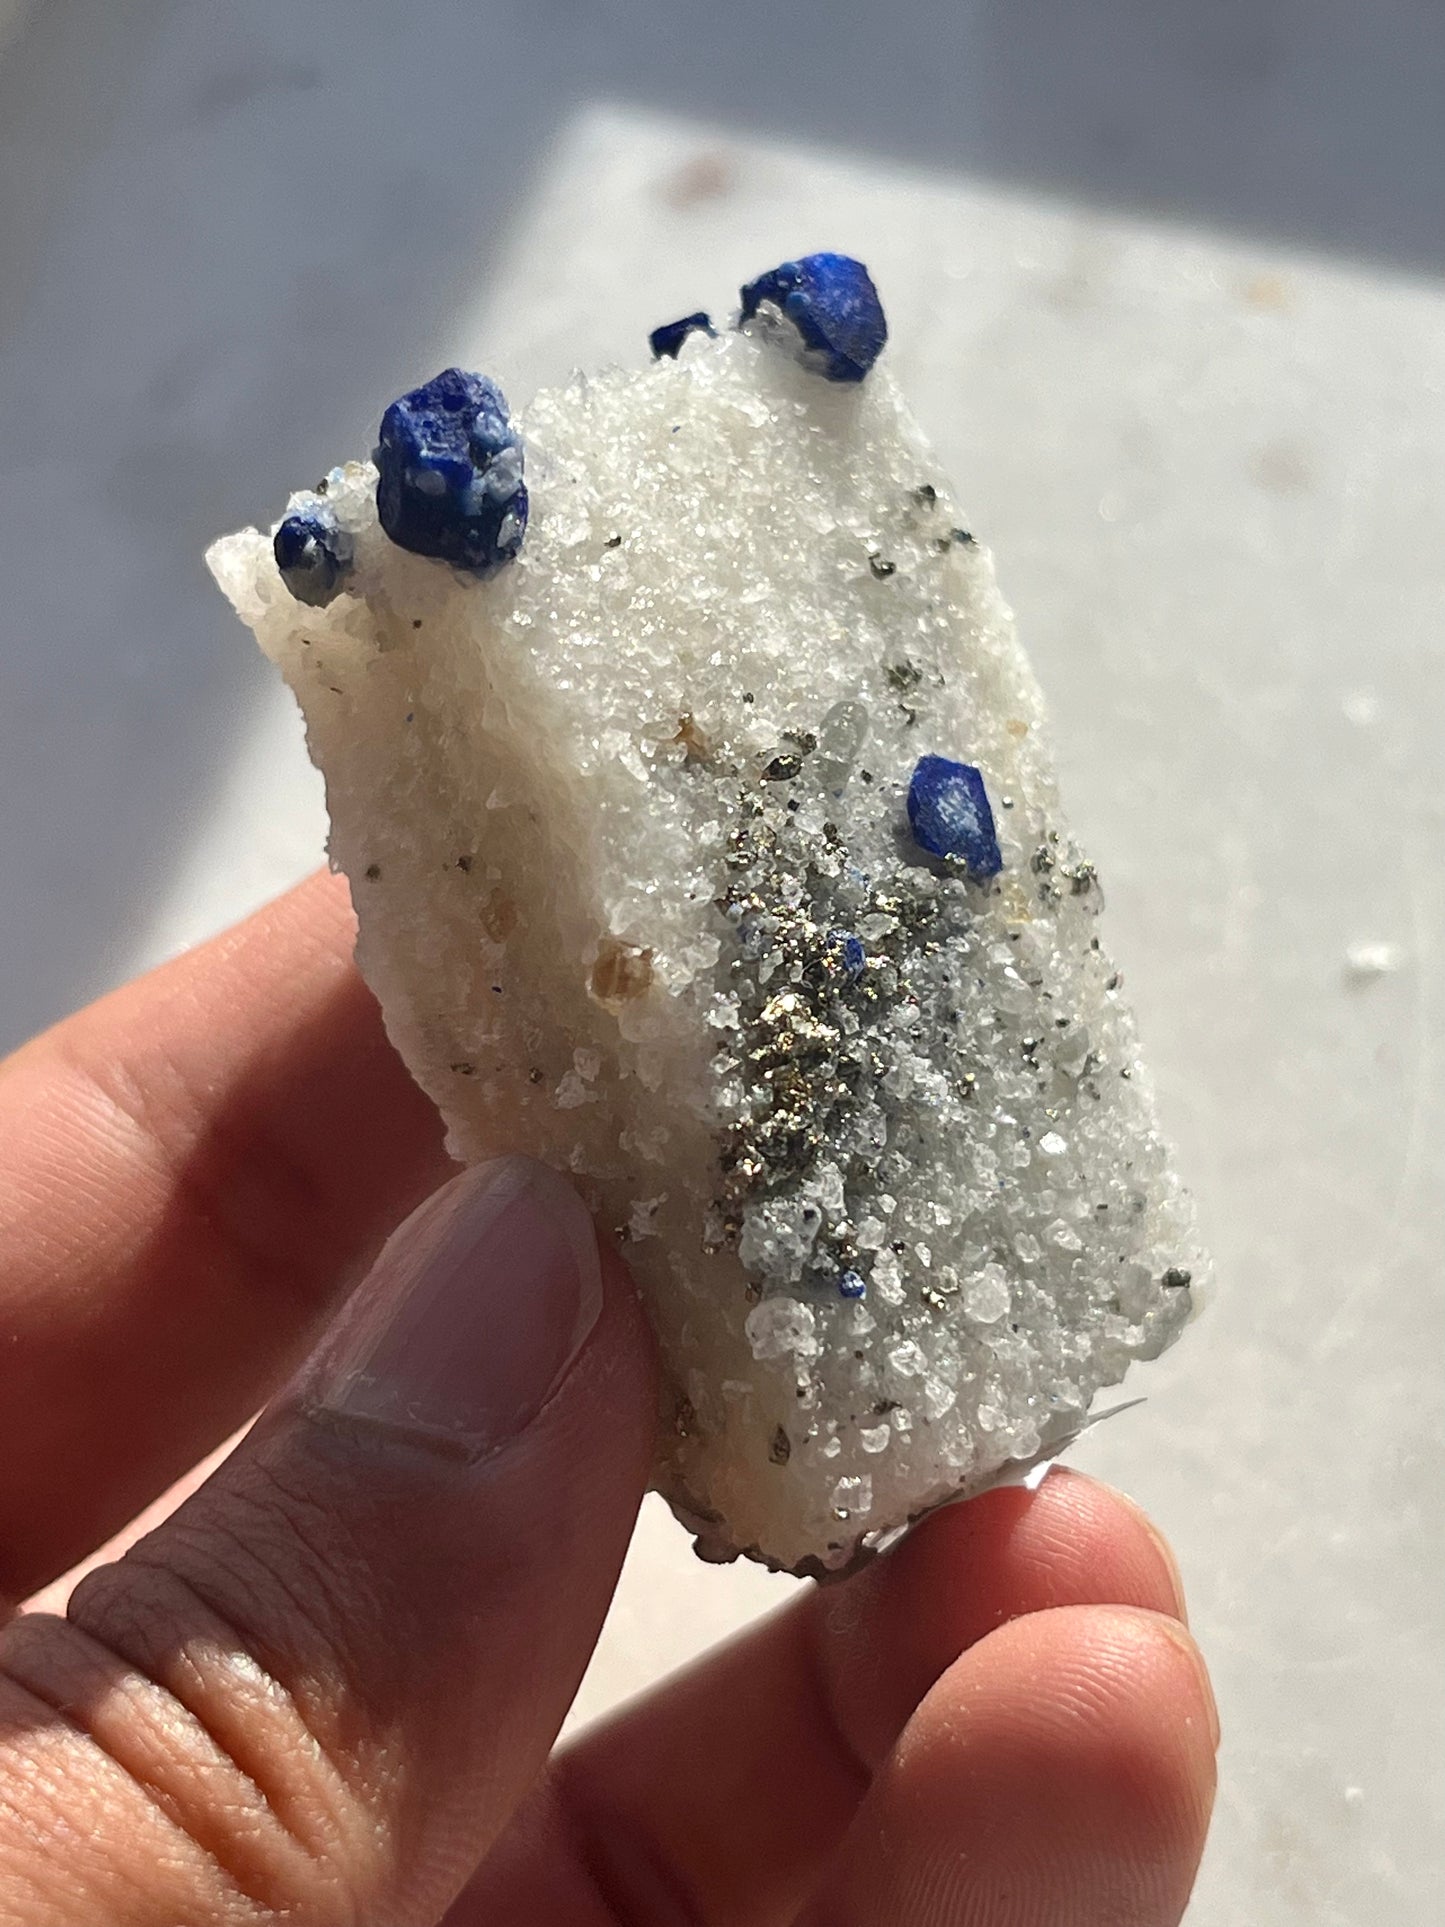 "Blueberry" Lazurite, Calcite & Pyrite Specimen on Marble #8